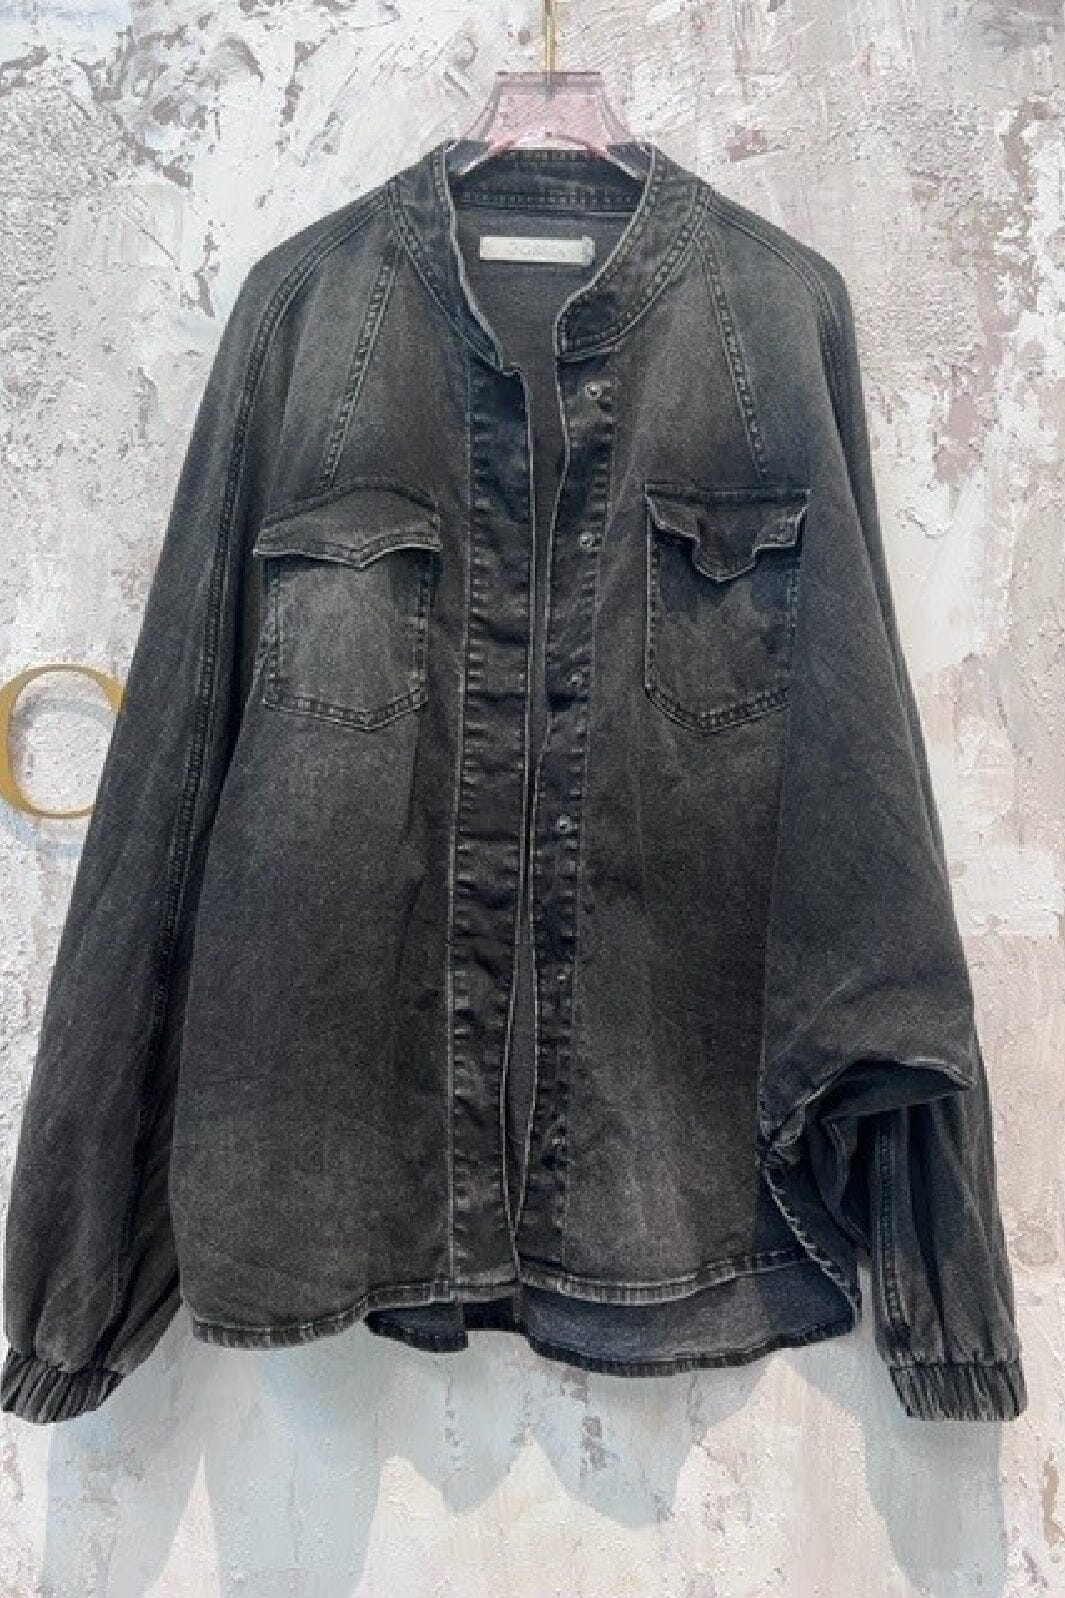 Gossia - Basmago Millie Shirt - Black Jean Skjorter 